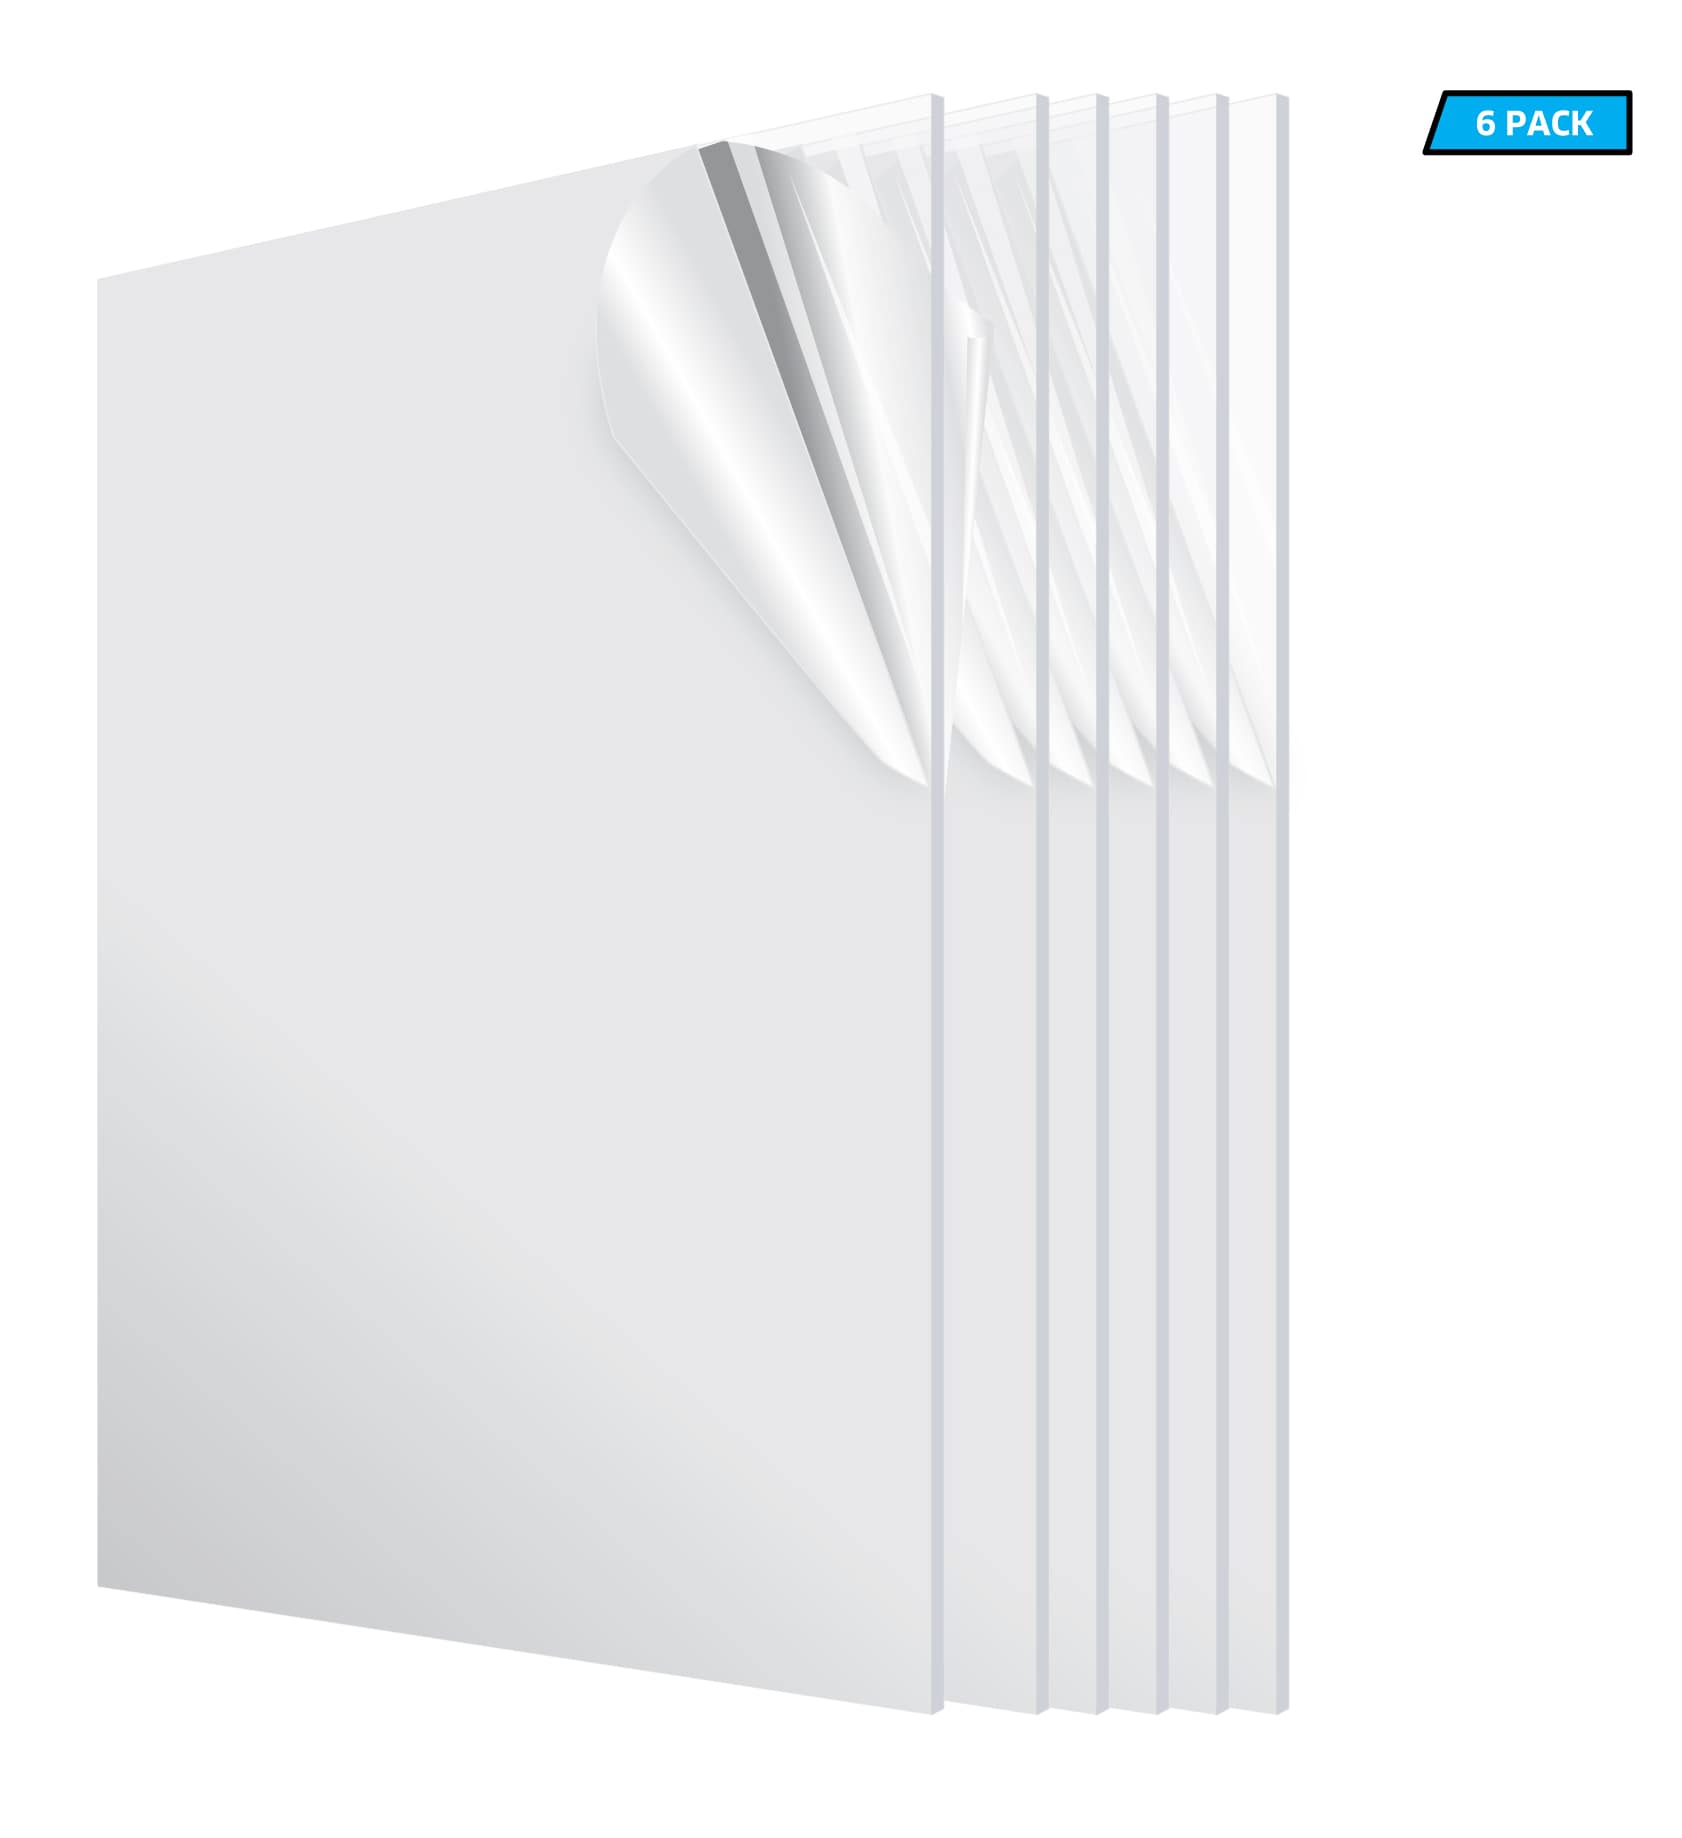 AdirOffice 24 in. x 48 in. x 0.093 in. Clear Plexiglass Acrylic Sheet  (3-Pack) 2448-3-C - The Home Depot